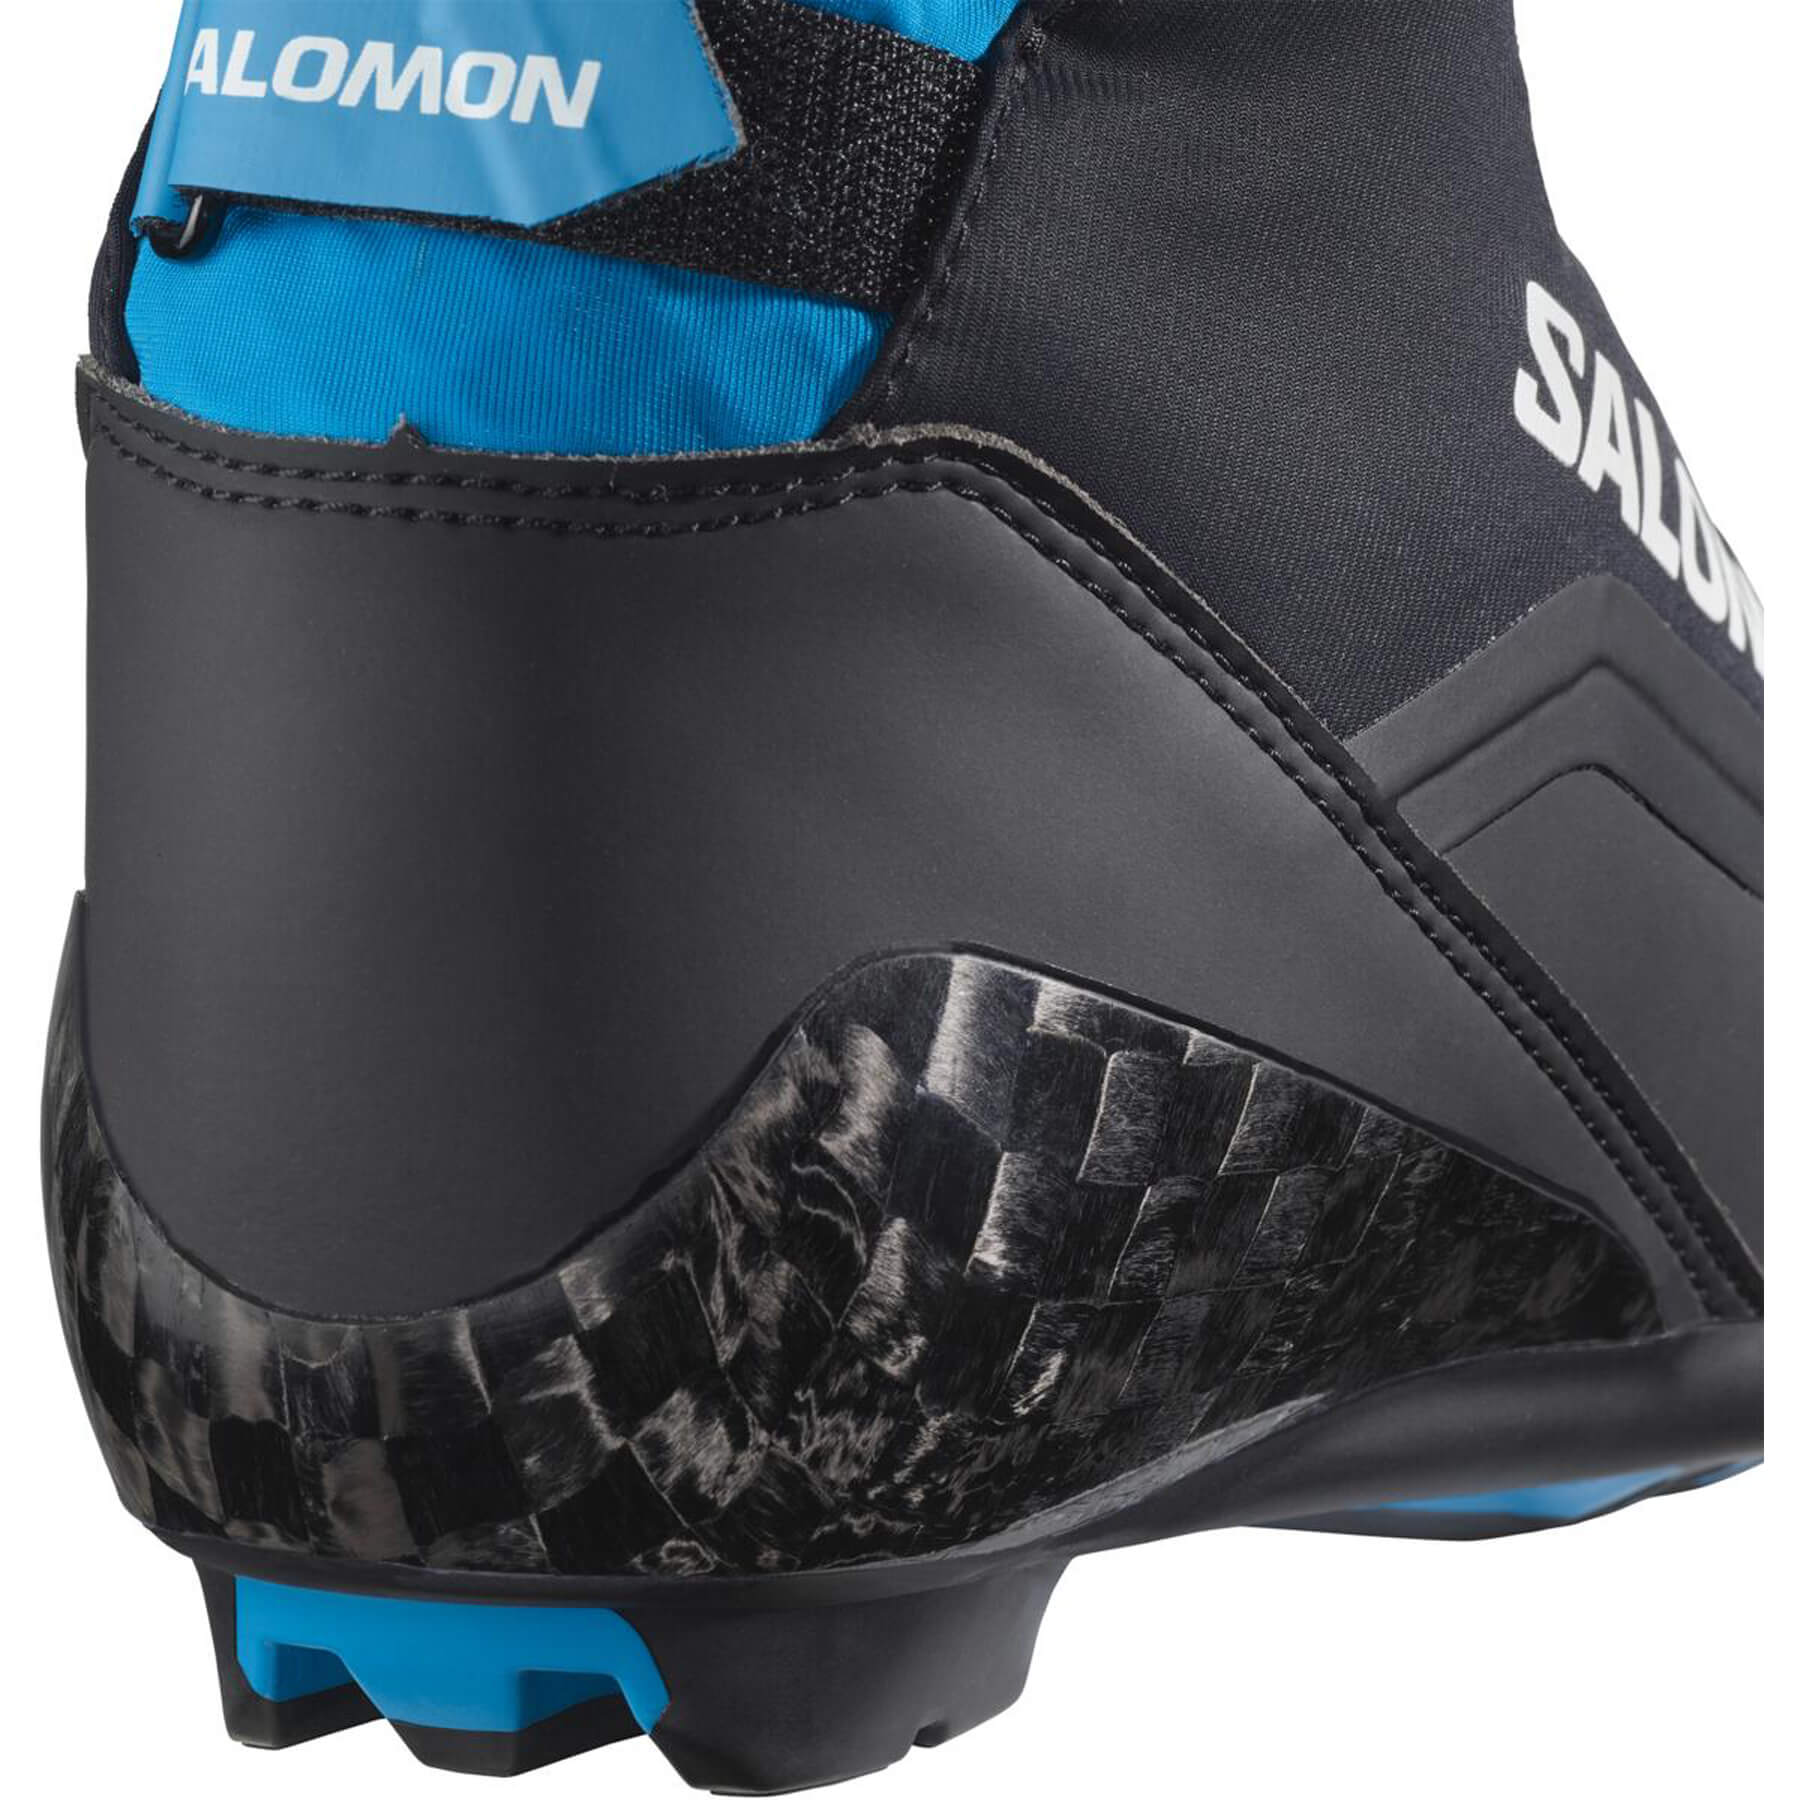 Salomon S/Max Carbon Classic Prolink Boot